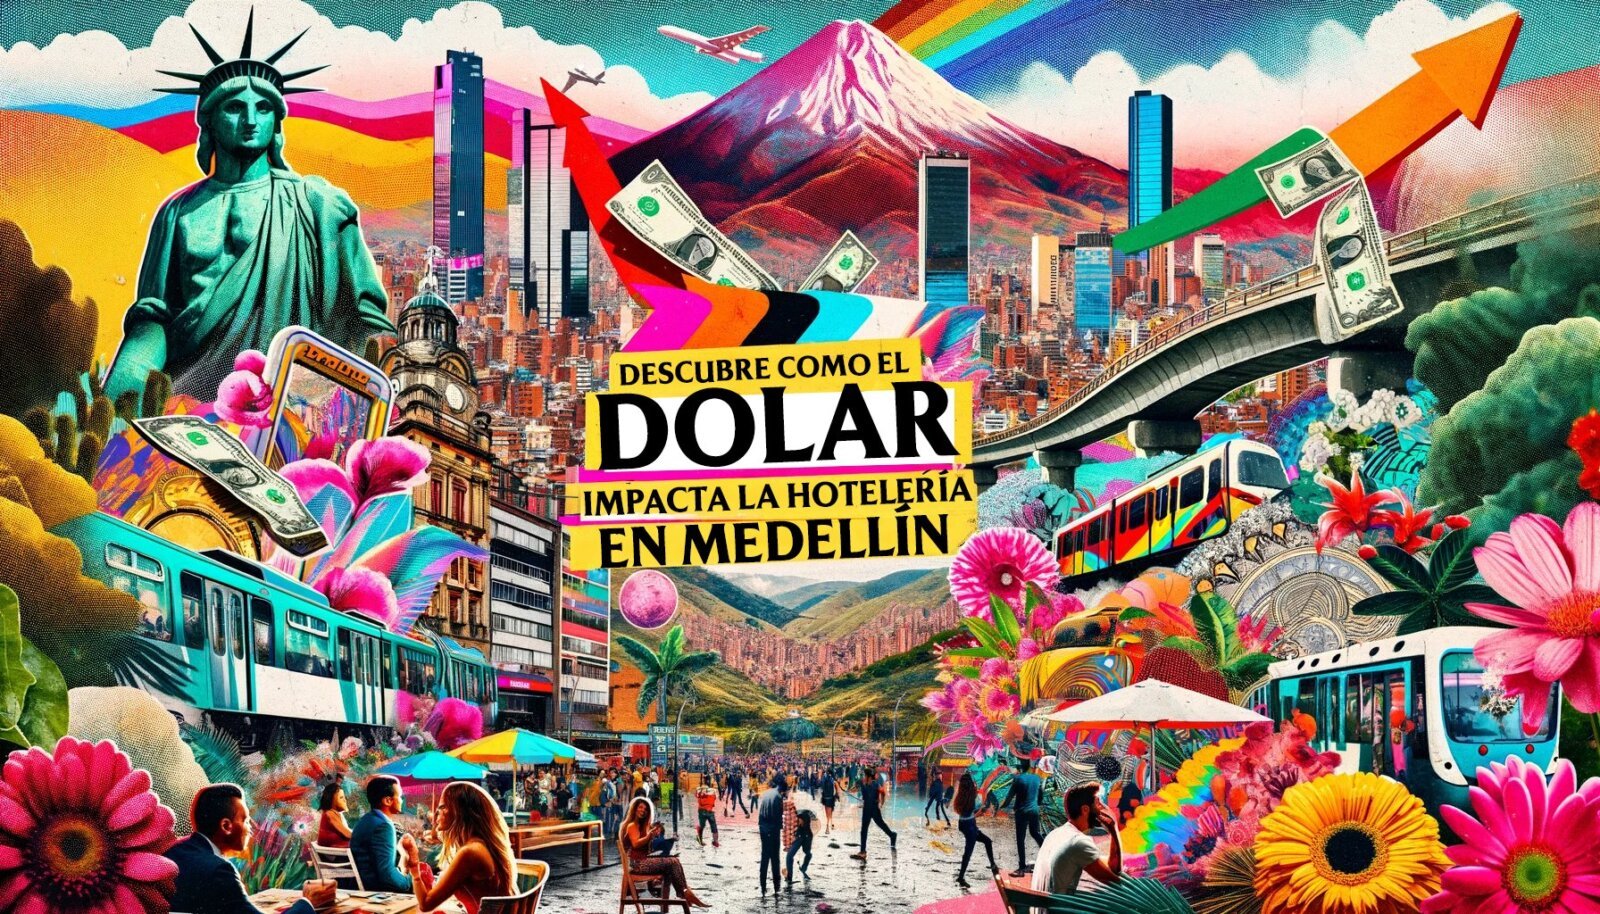 MACCA | DALL-E 2023 12 27 11.27.02 A collage for a blog cover emphasizing the title Descubre Como el Dolar Esta Convirtiendo a Medellin en el Paraiso Turistico del Momento. The collag